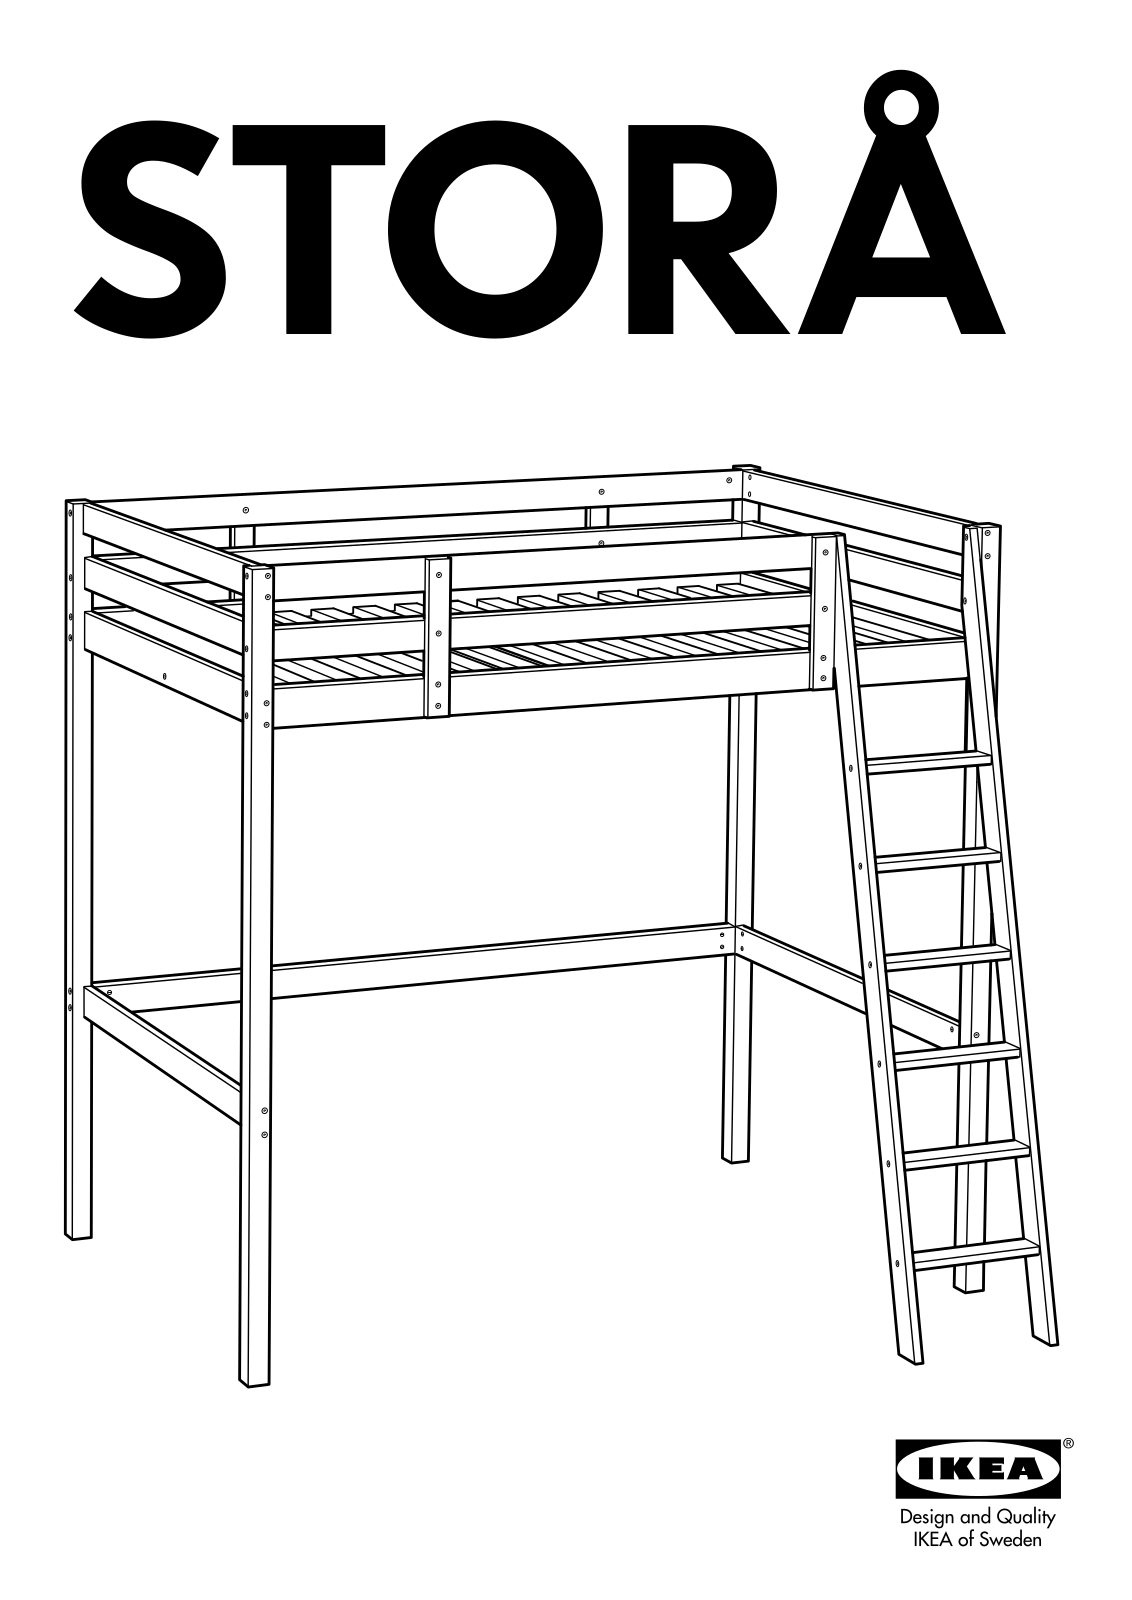 IKEA STORA User Manual